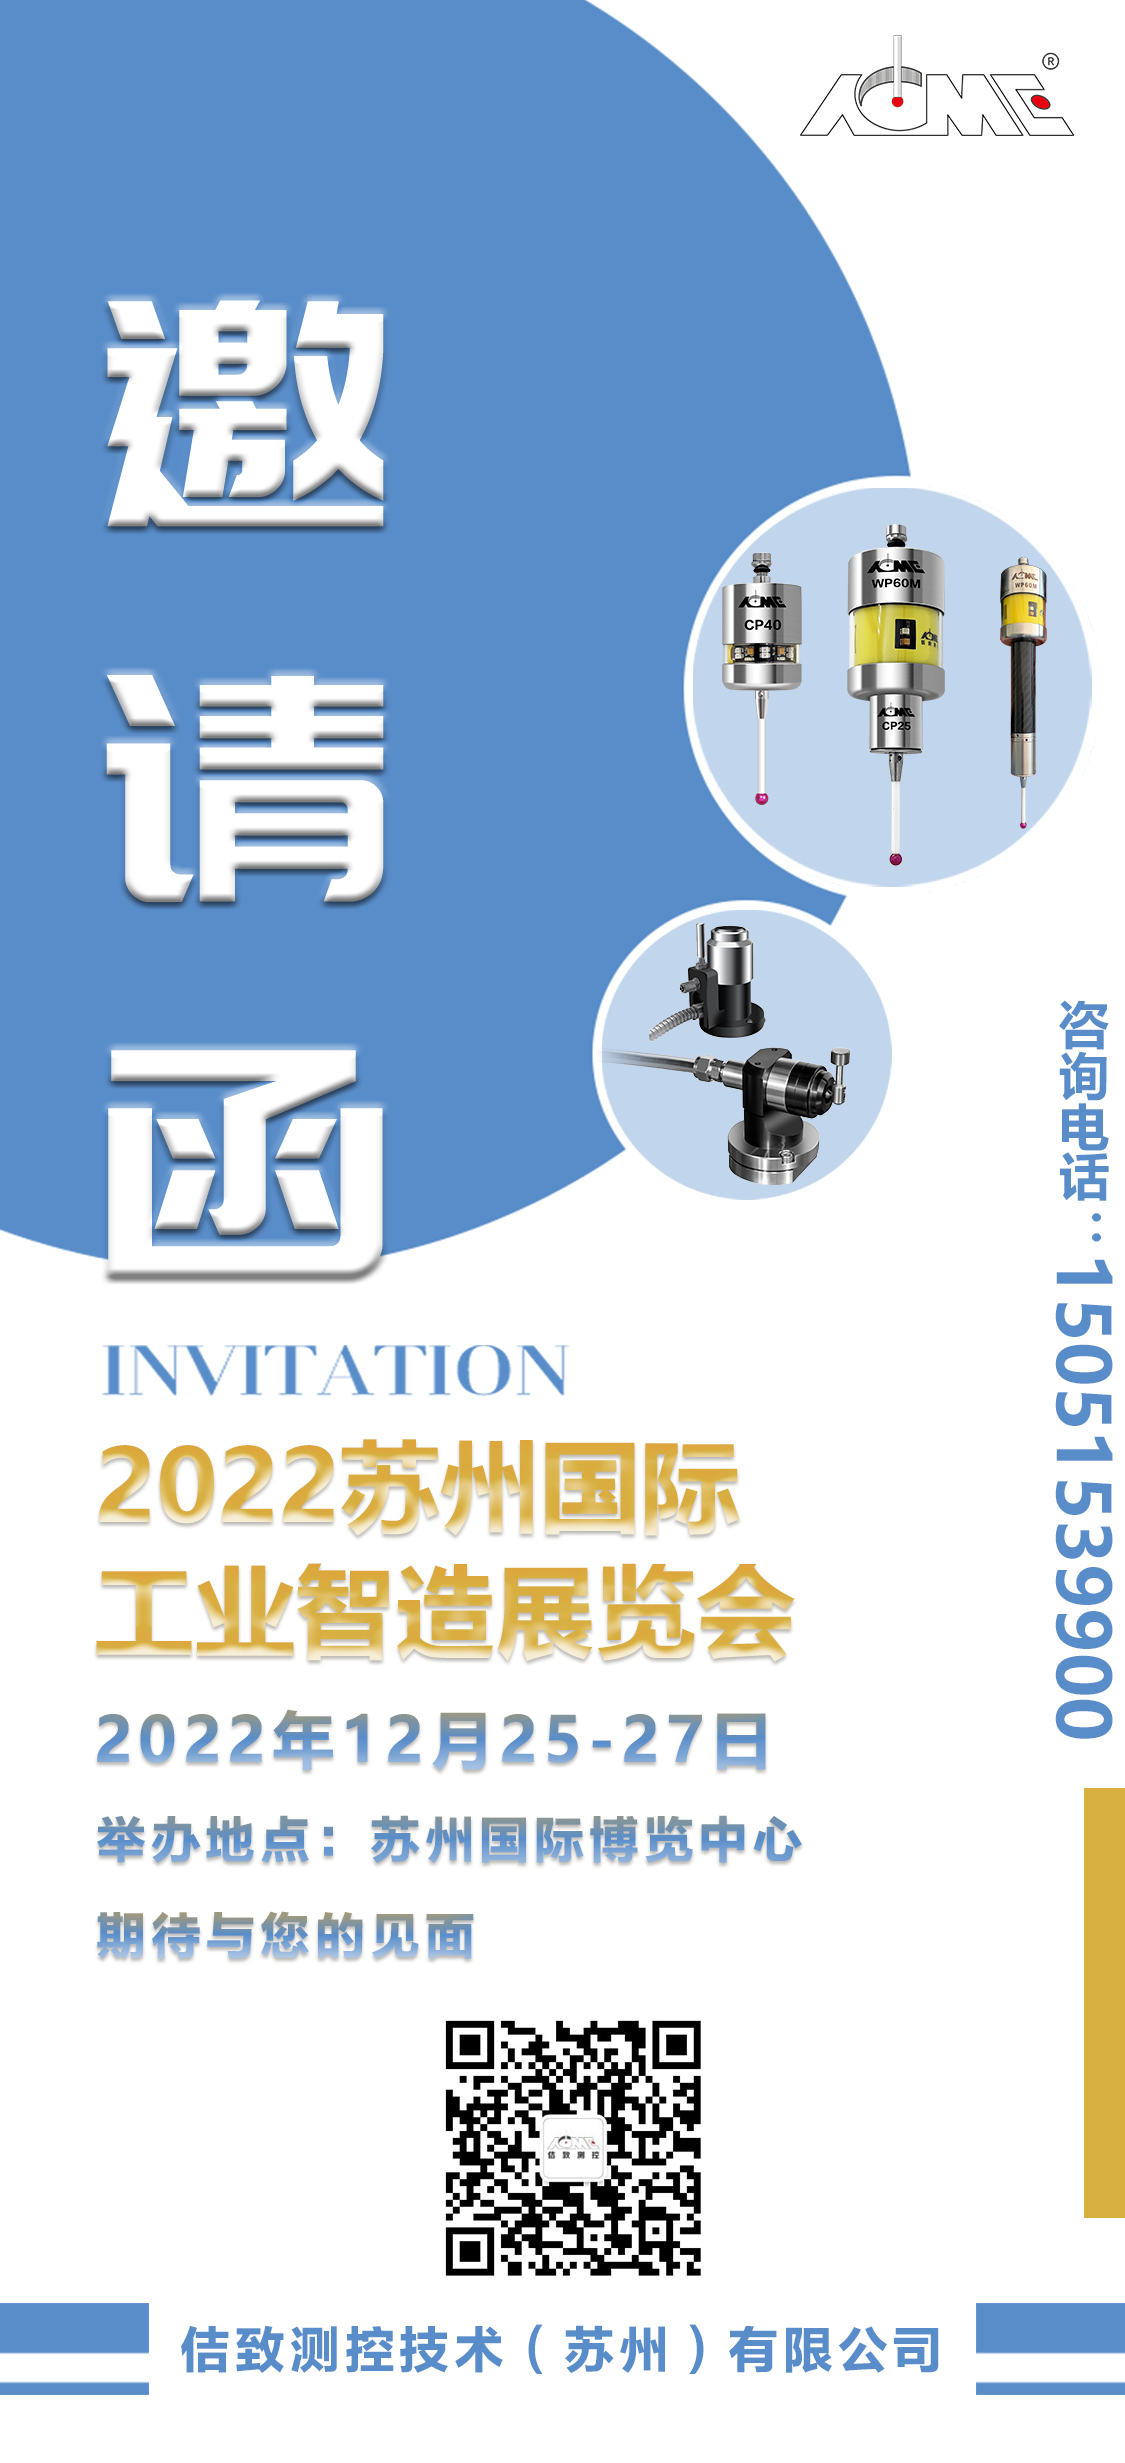 Surat undhangan kanggo 2022 Suzhou International Industrial Intelligent Manufacturing Exhibition (6)